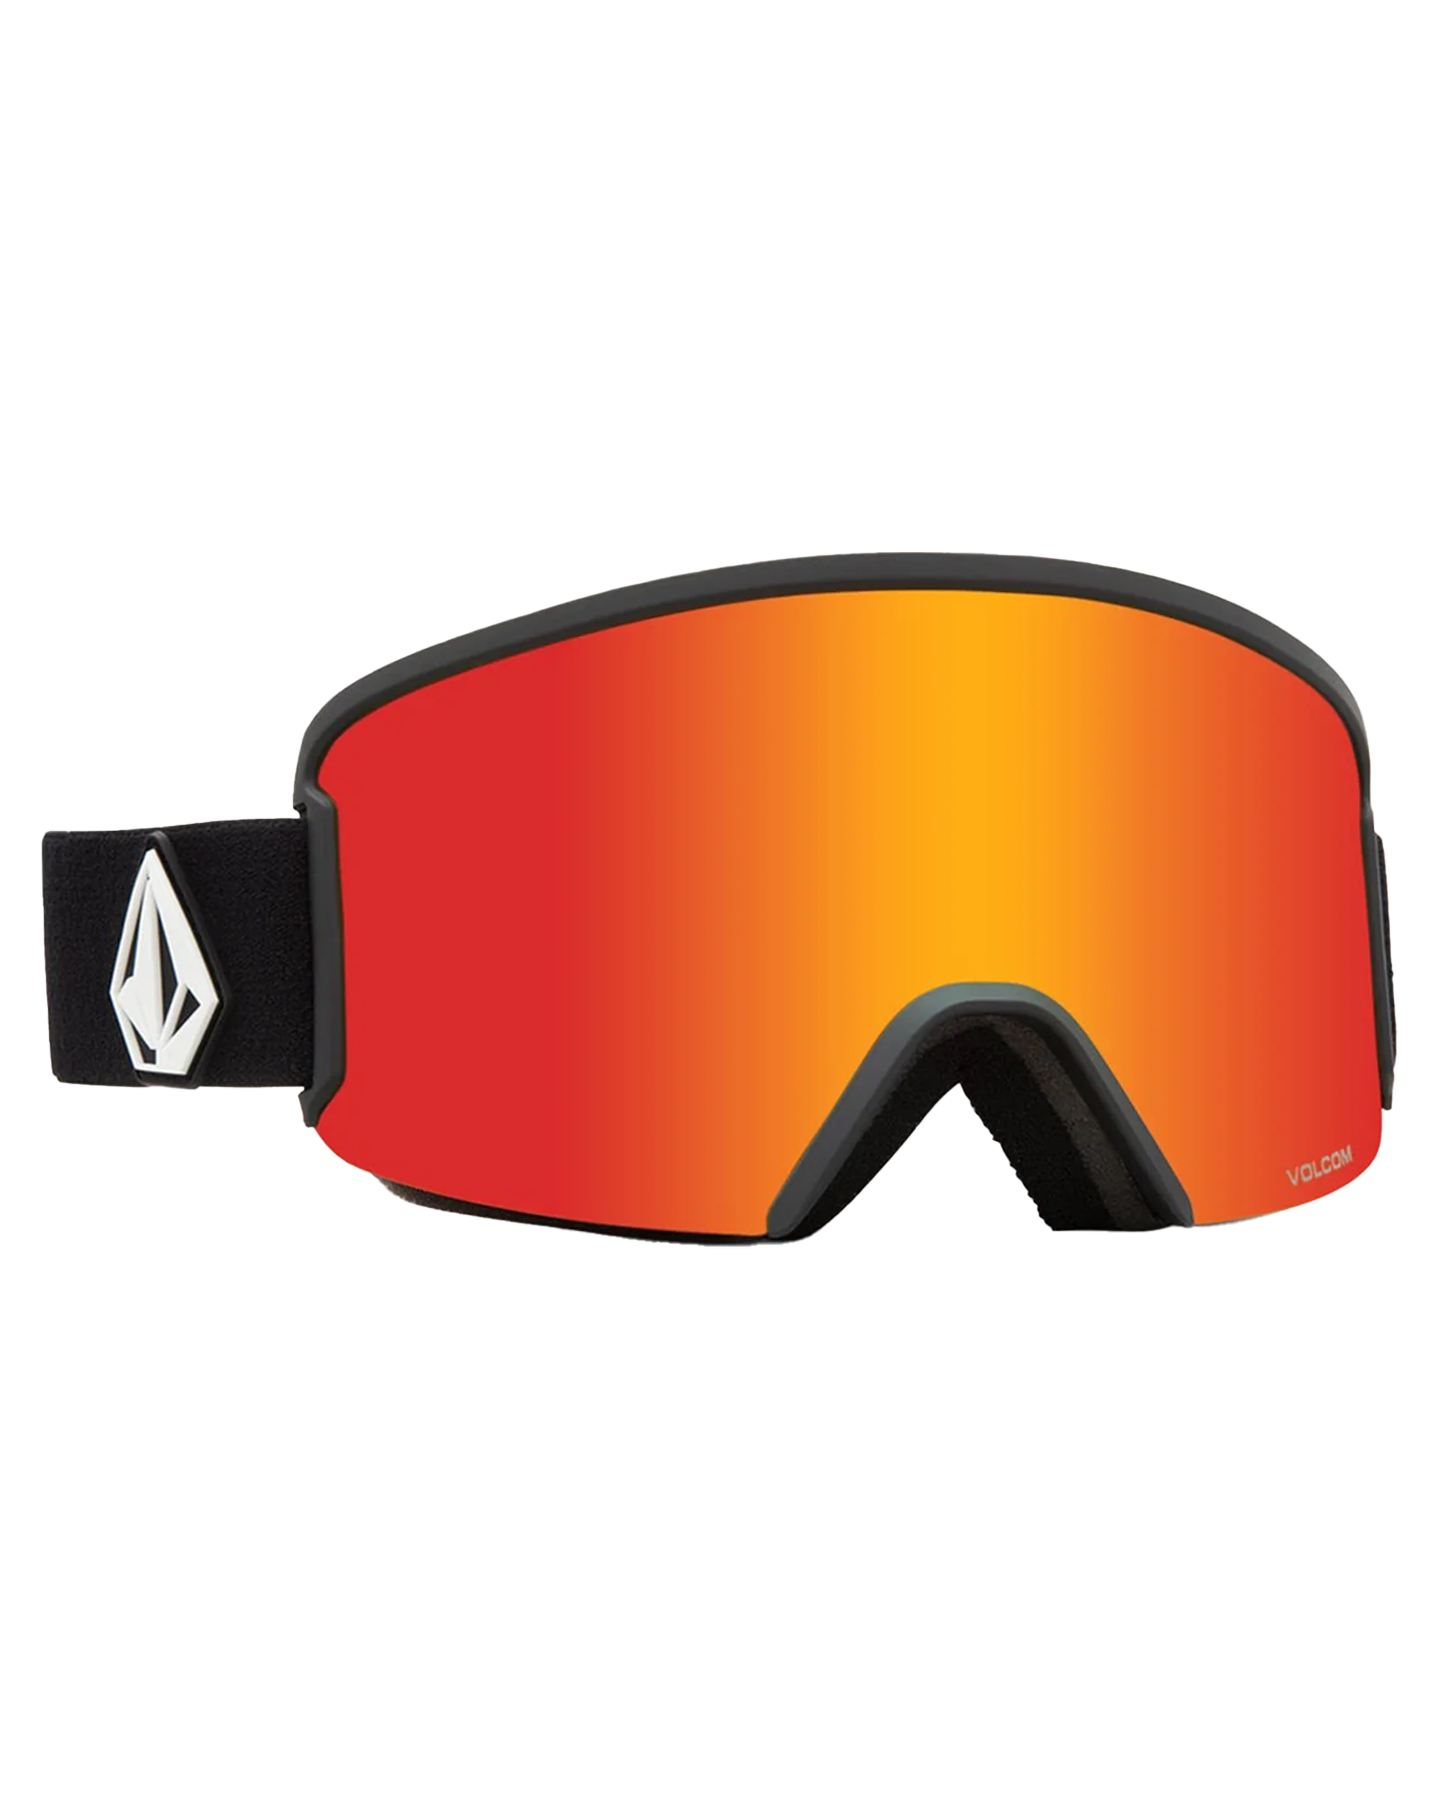 Volcom Garden Military Red Goggles - Red Chrome Men's Snow Goggles - Trojan Wake Ski Snow